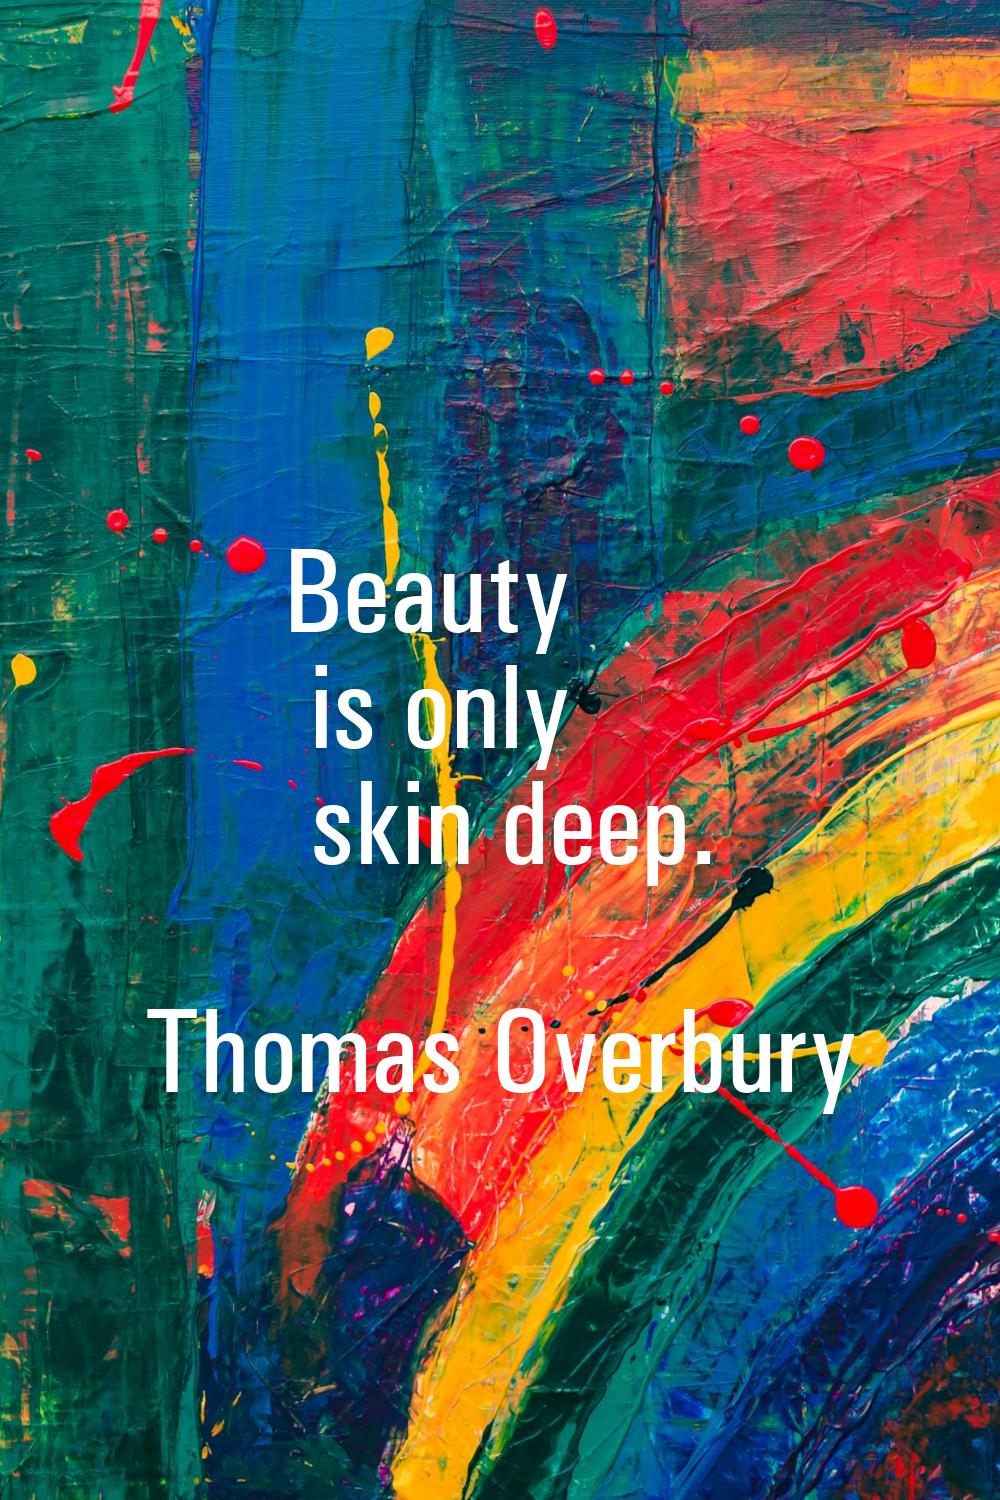 Beauty is only skin deep.